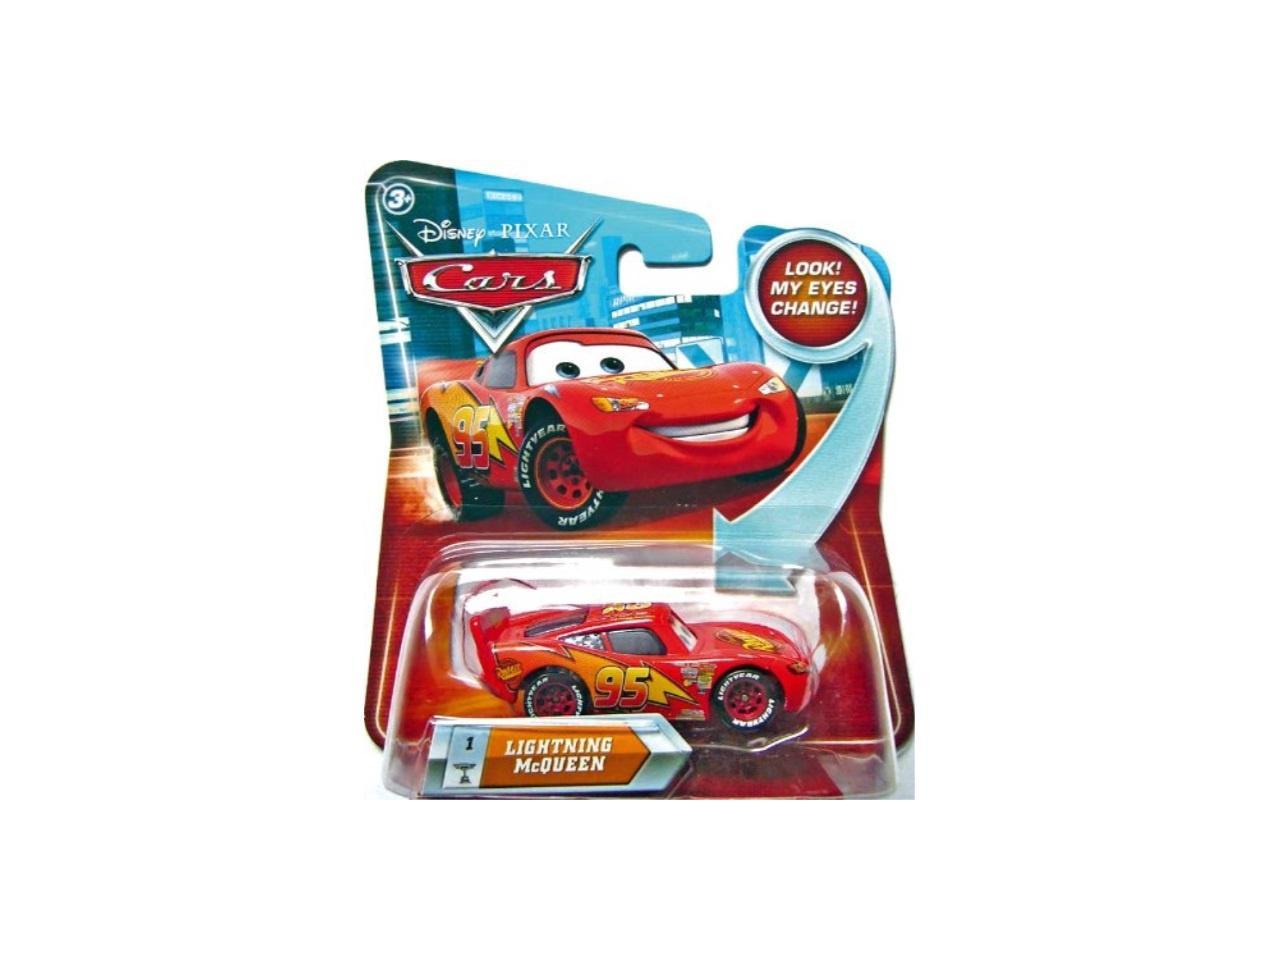 Disney Pixar Cars No.95 Lightning McQueen Toy Car Model 1:55 In Stock #1 